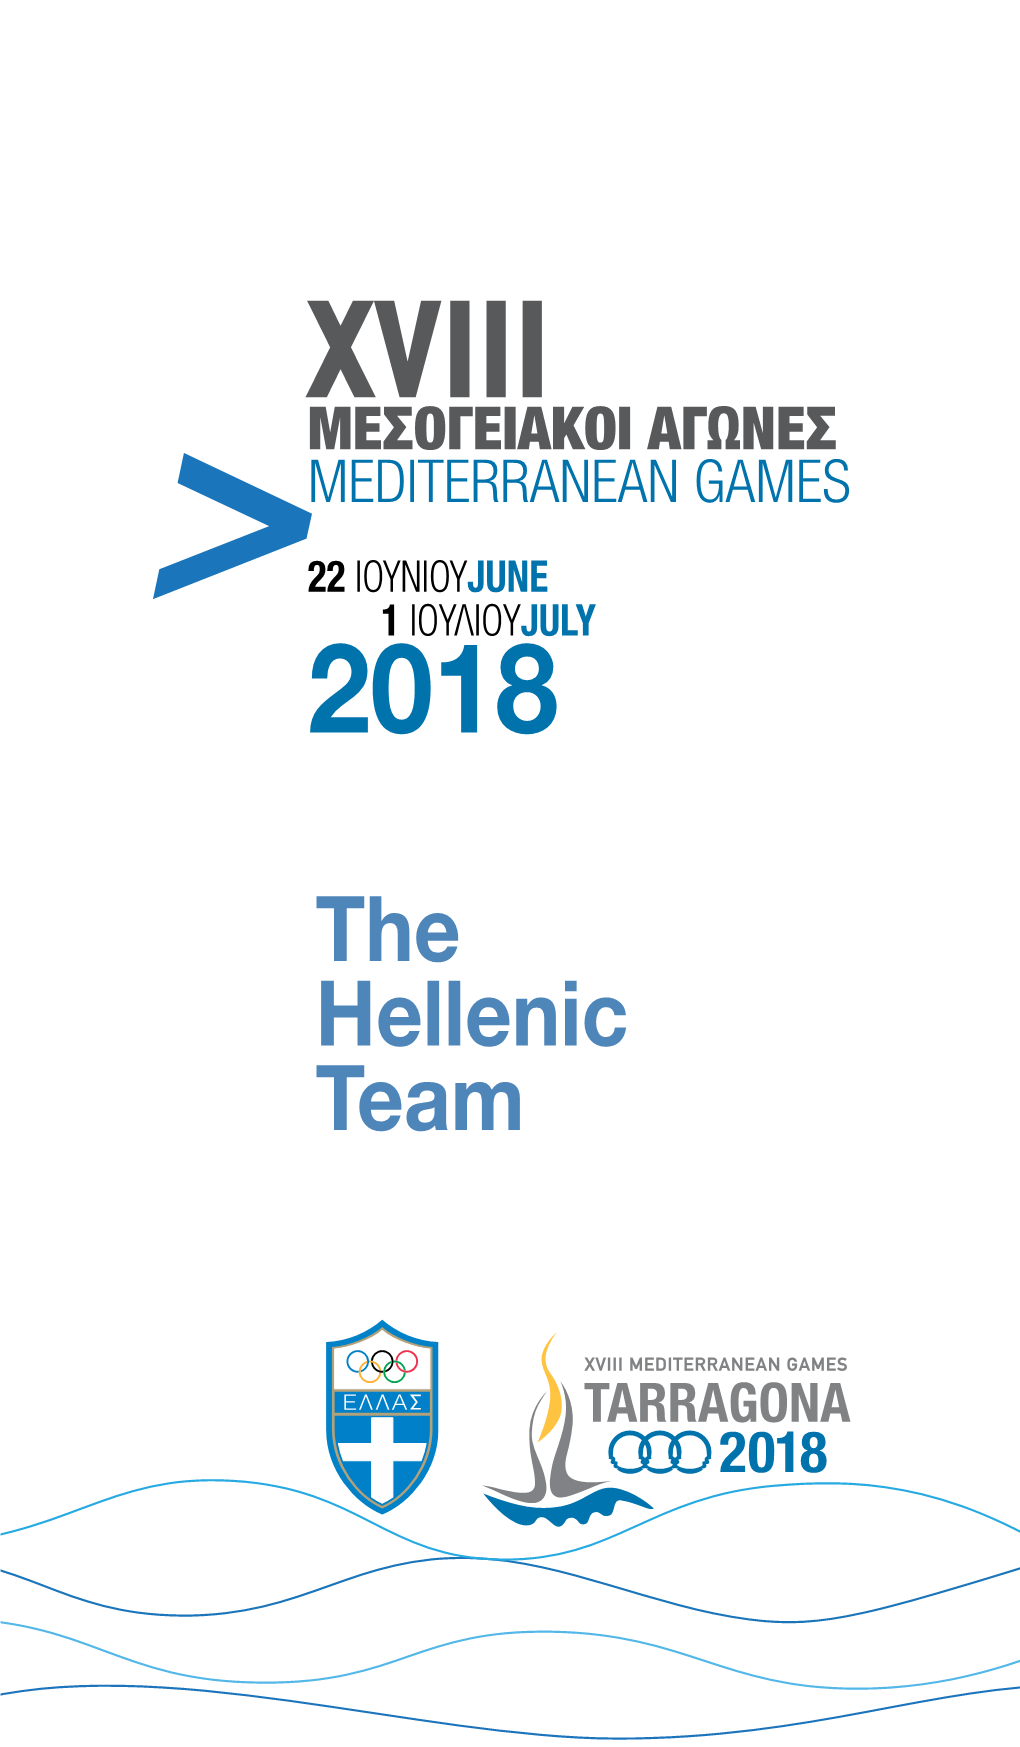 The Hellenic Team